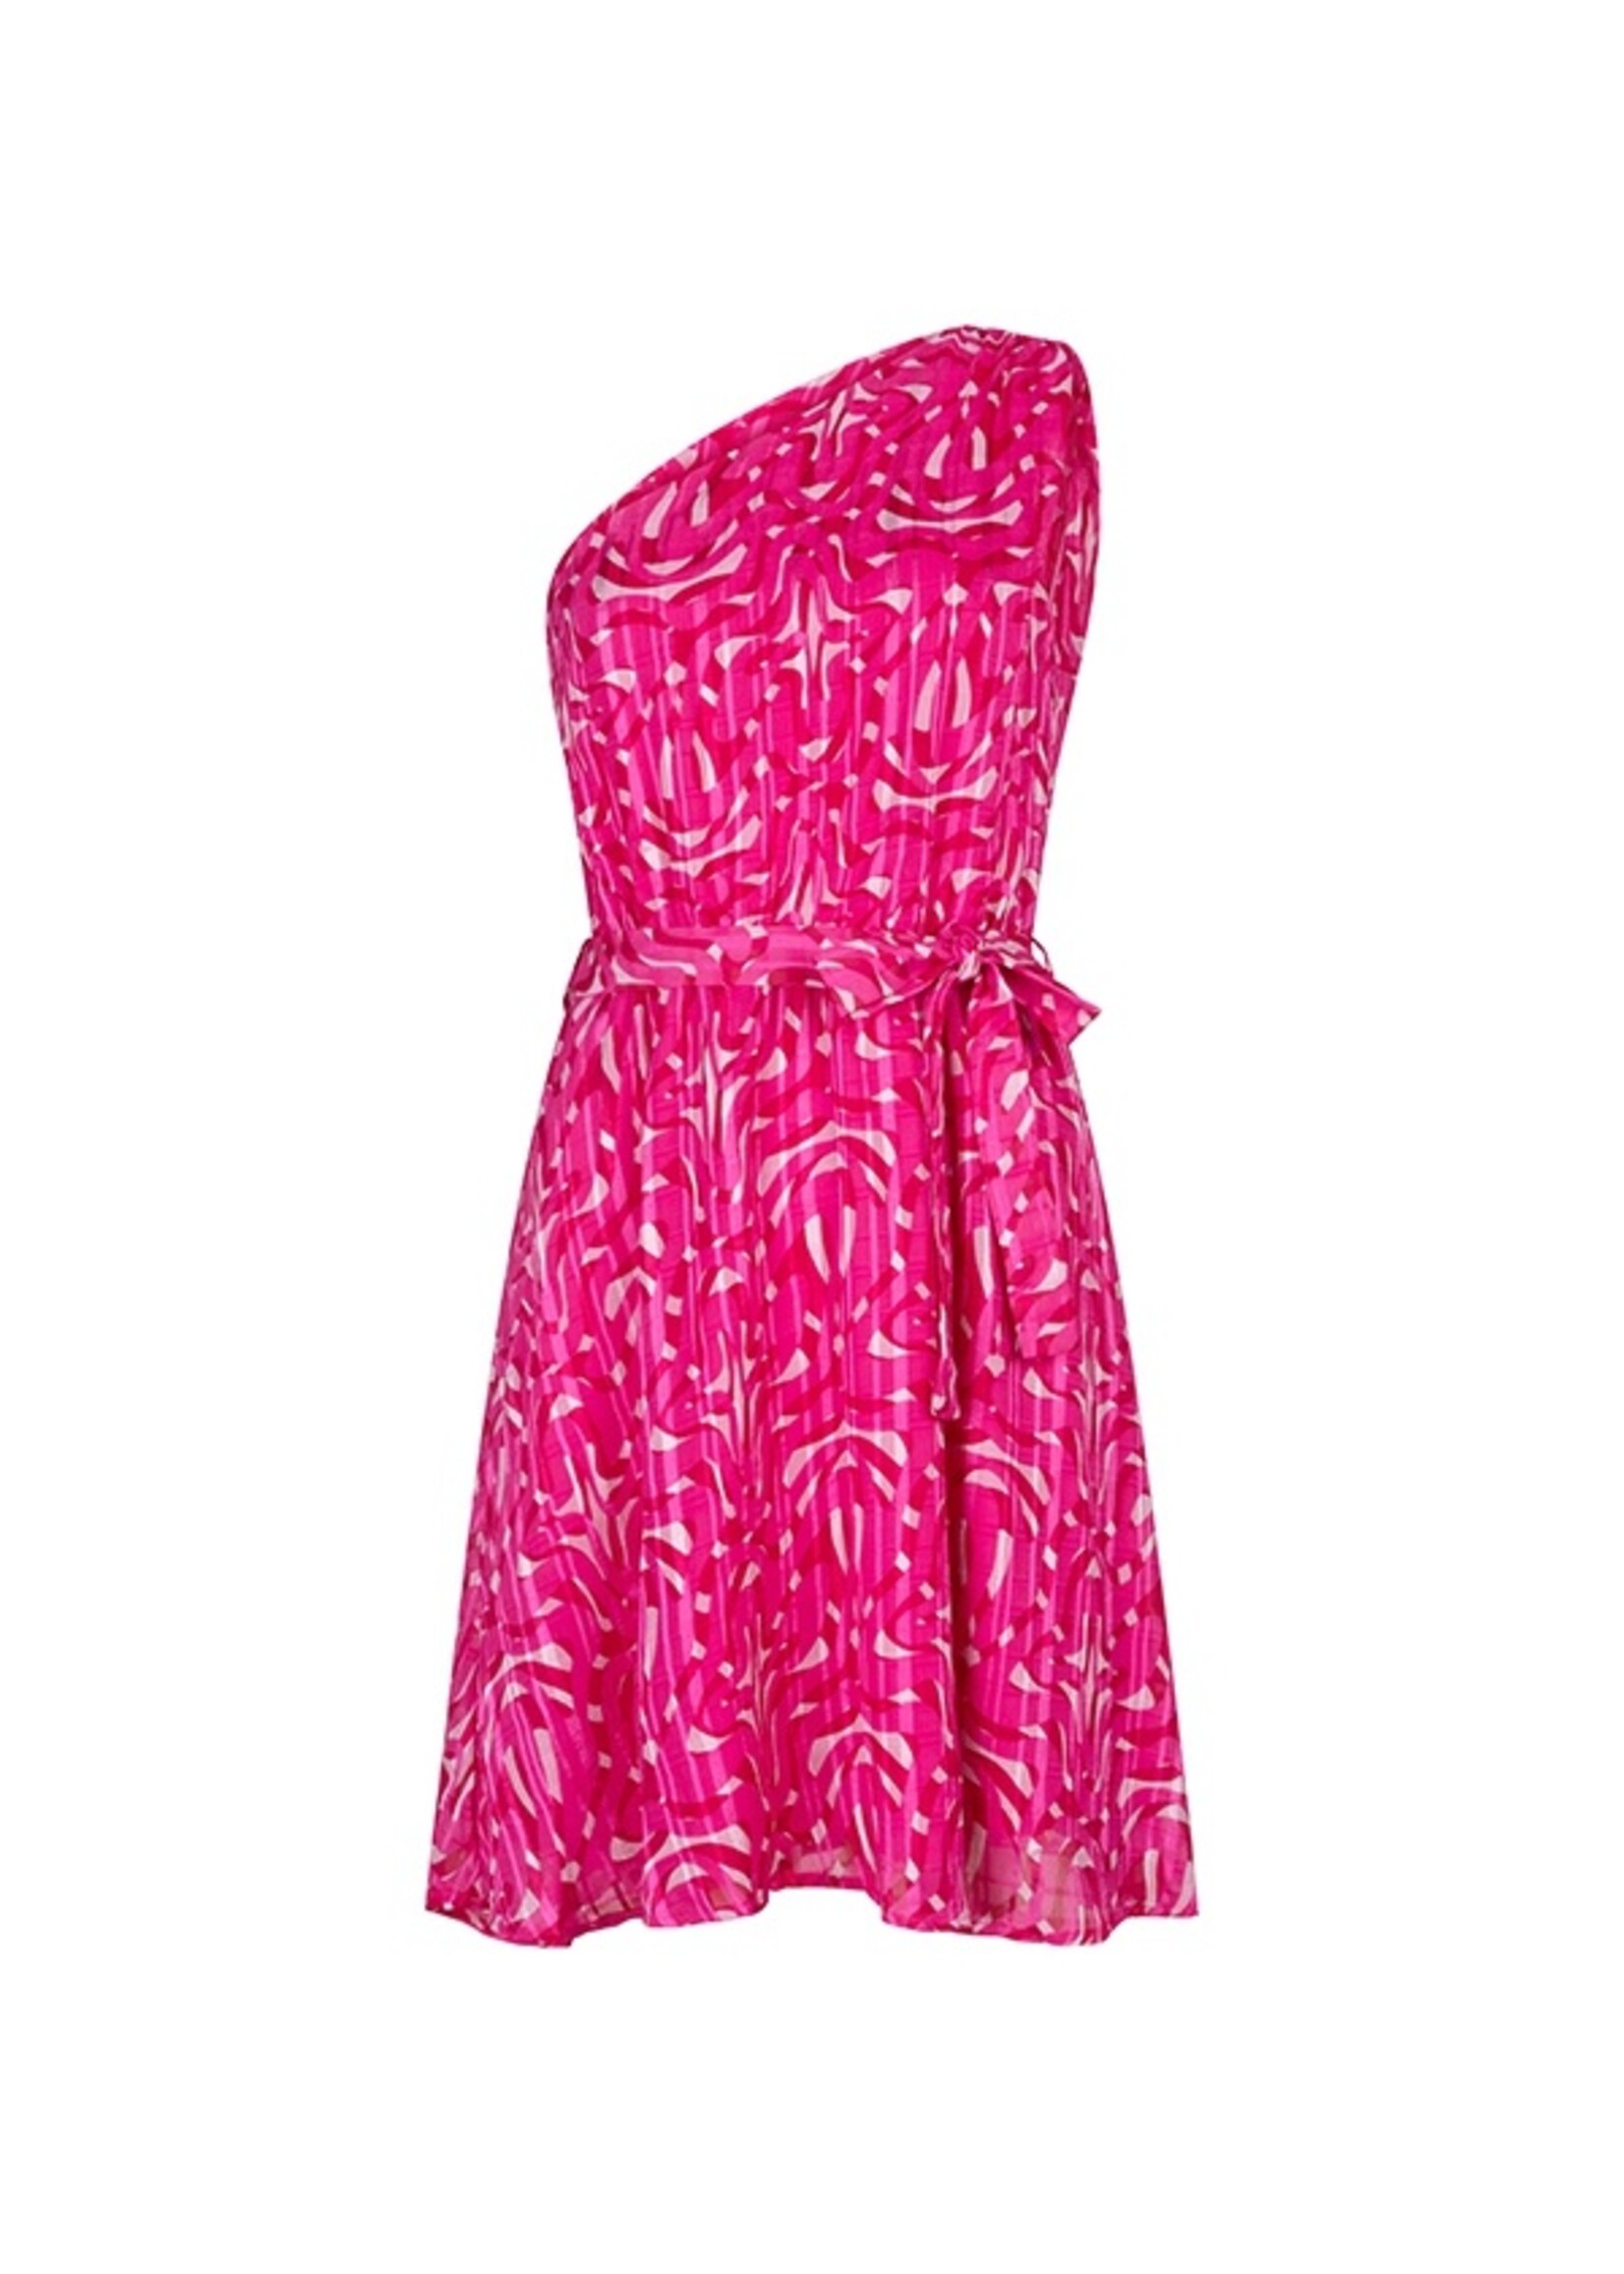 LOFTY MANNER Dress Anaya Pink Swirl Print